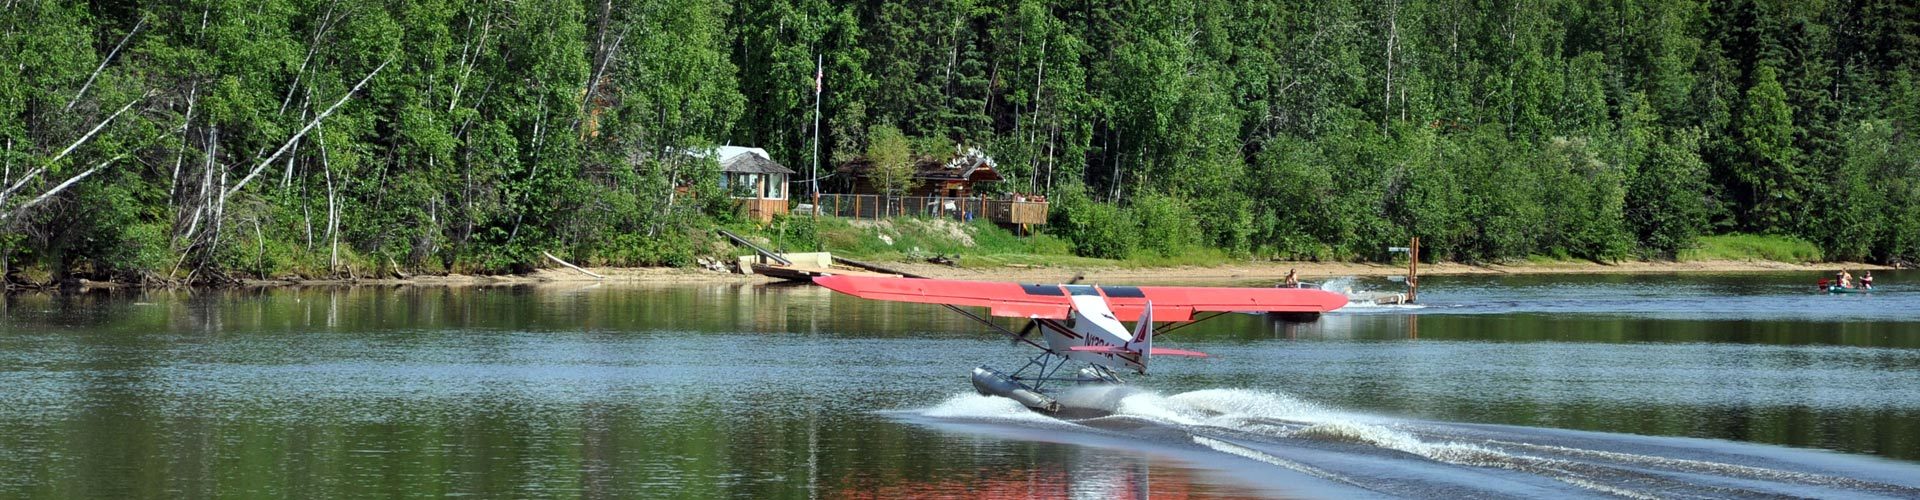 Wasserflugzeug am Chena River, Fairbanks